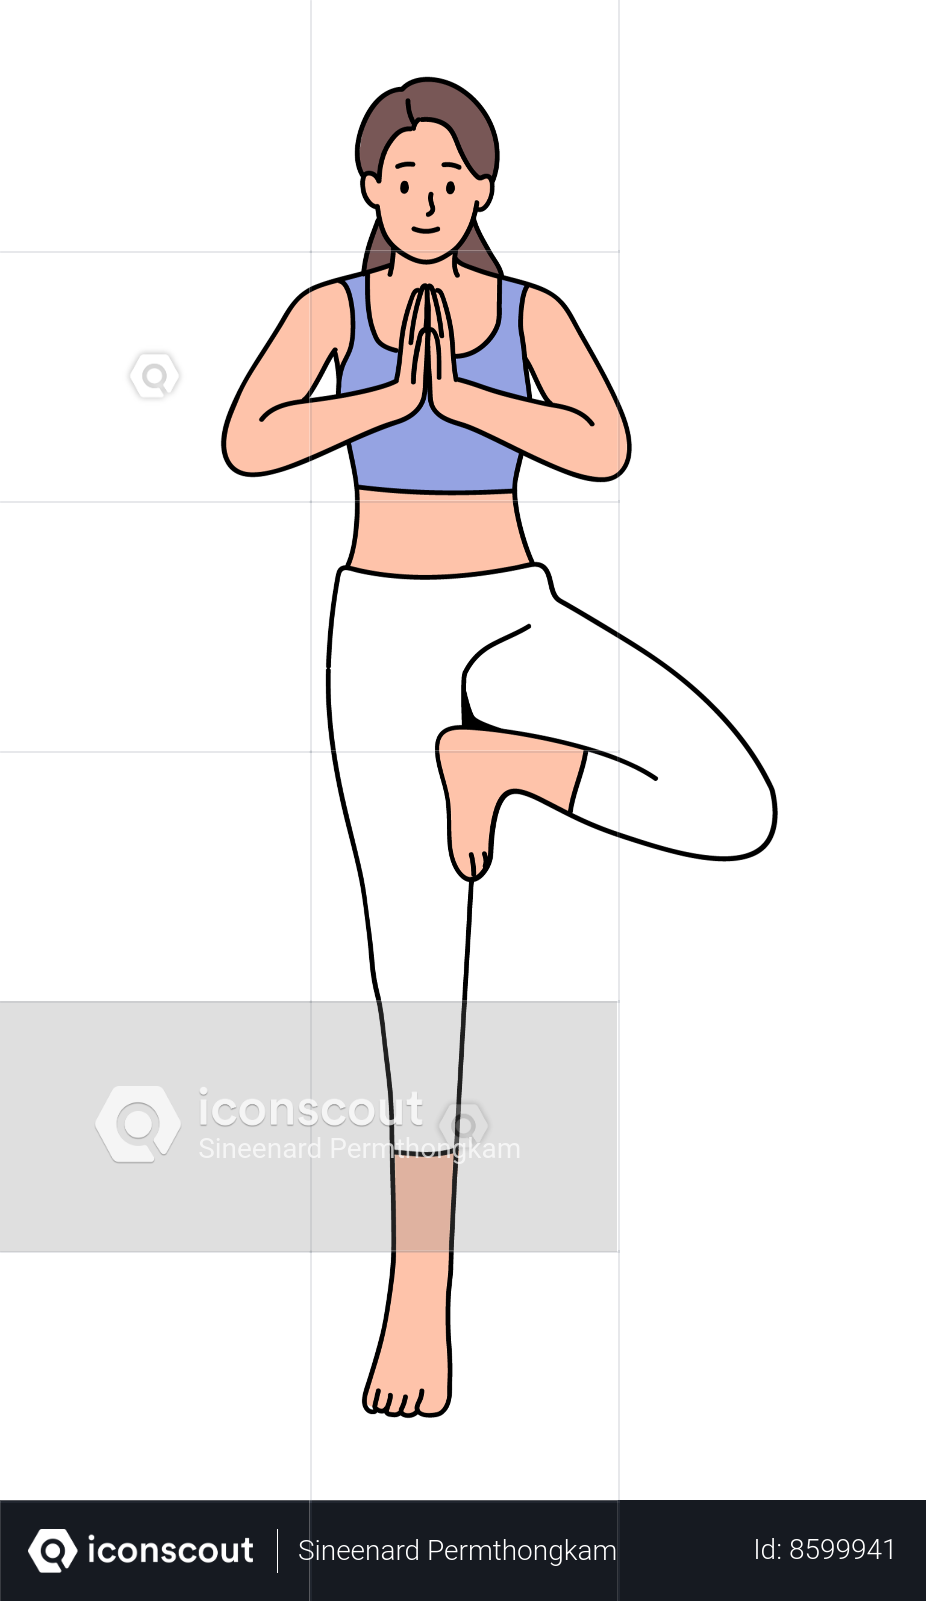 Pam Smith - Yoga Instructor - Highmark Health | LinkedIn